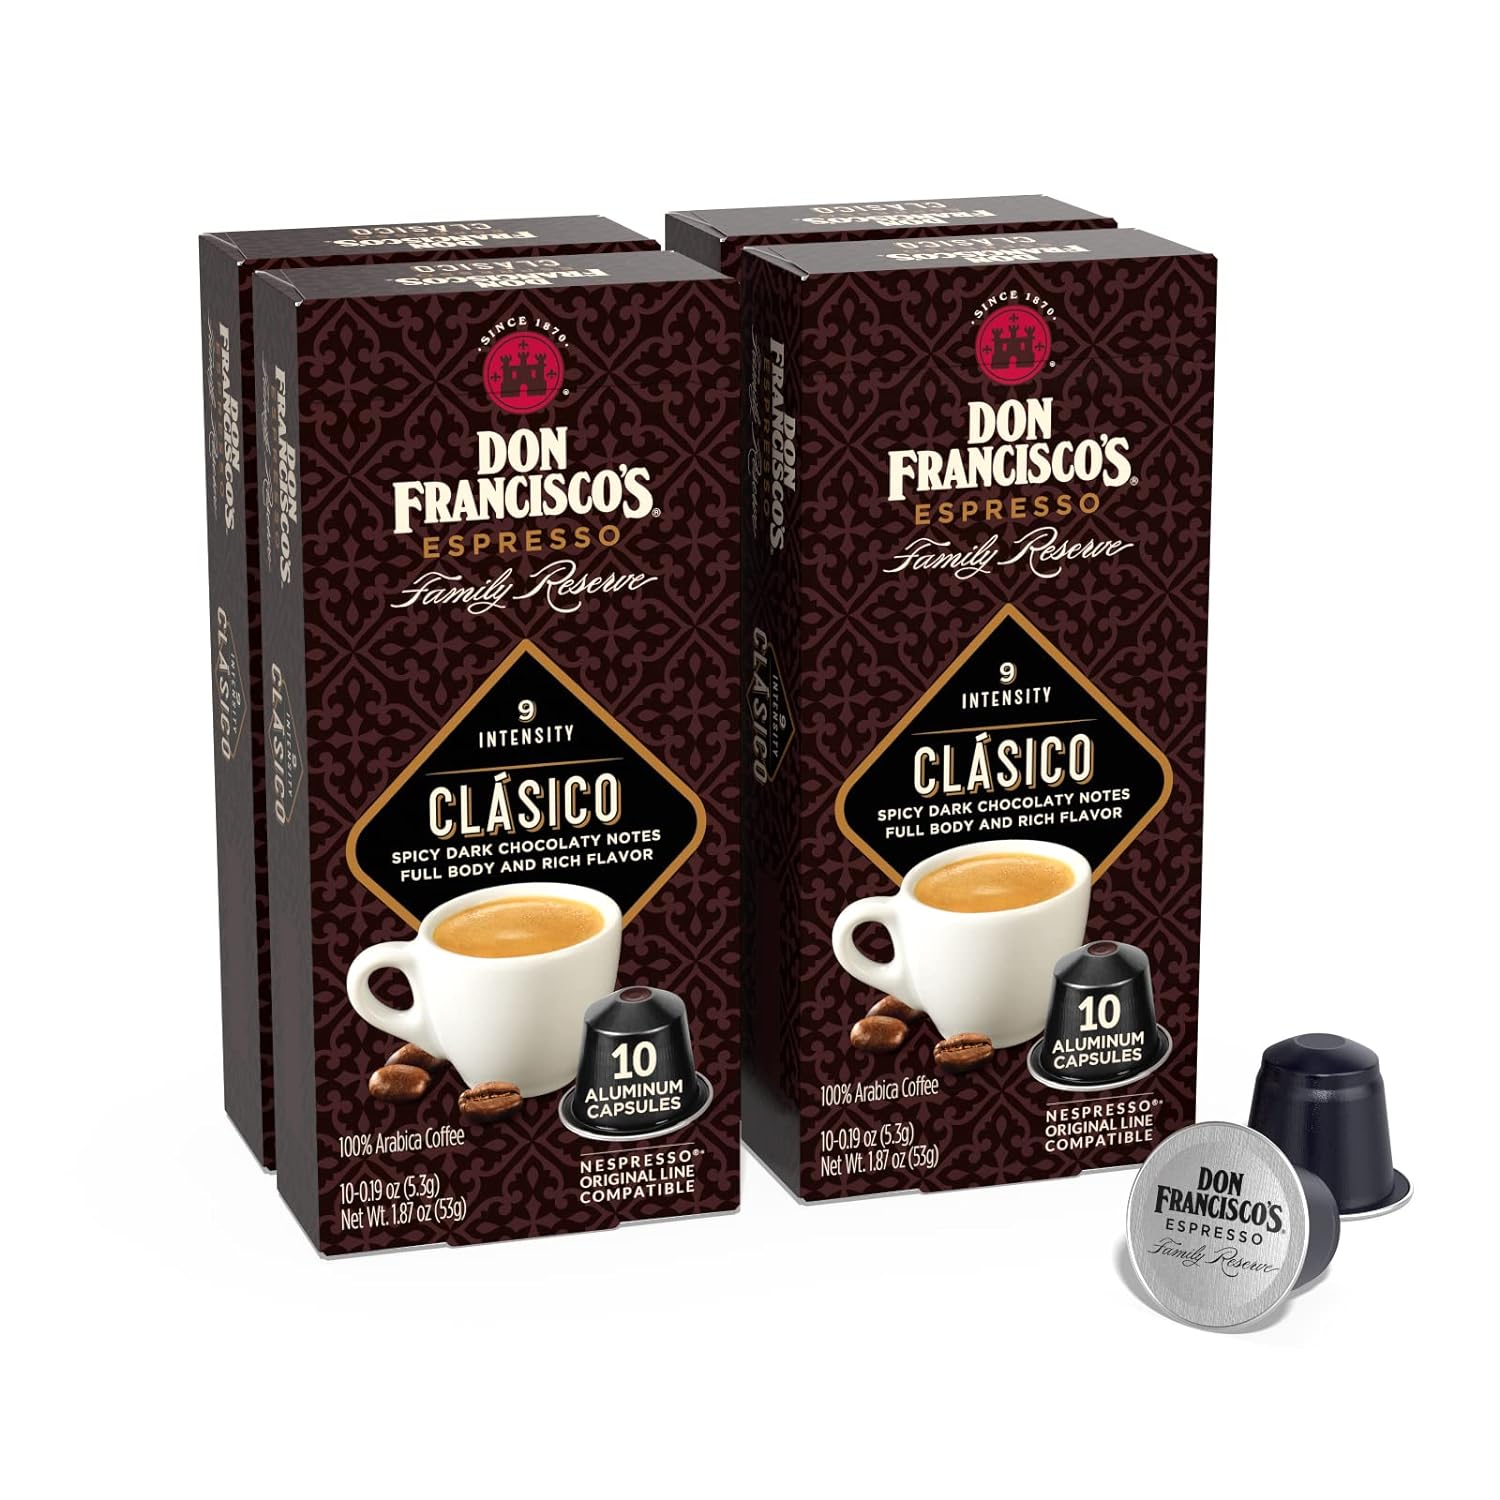 Don Francisco’s Clasico Espresso Capsules, 40-Count Aluminum Recyclable Pods, Intensity 9, Compatible with Original Nespresso Machines